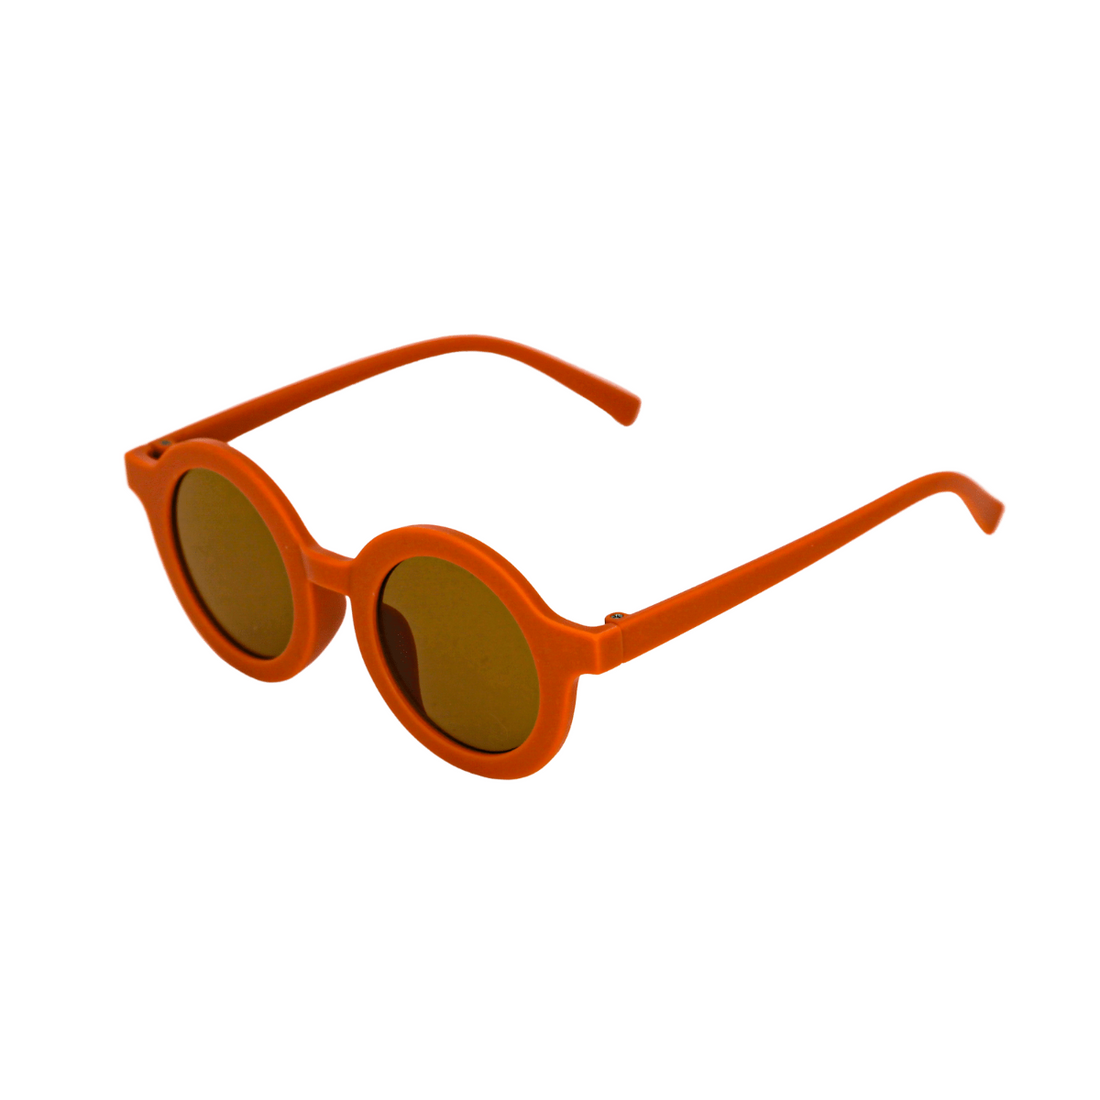 Jetsetters Sunglasses - Unisex - Orange (3-6 Years)